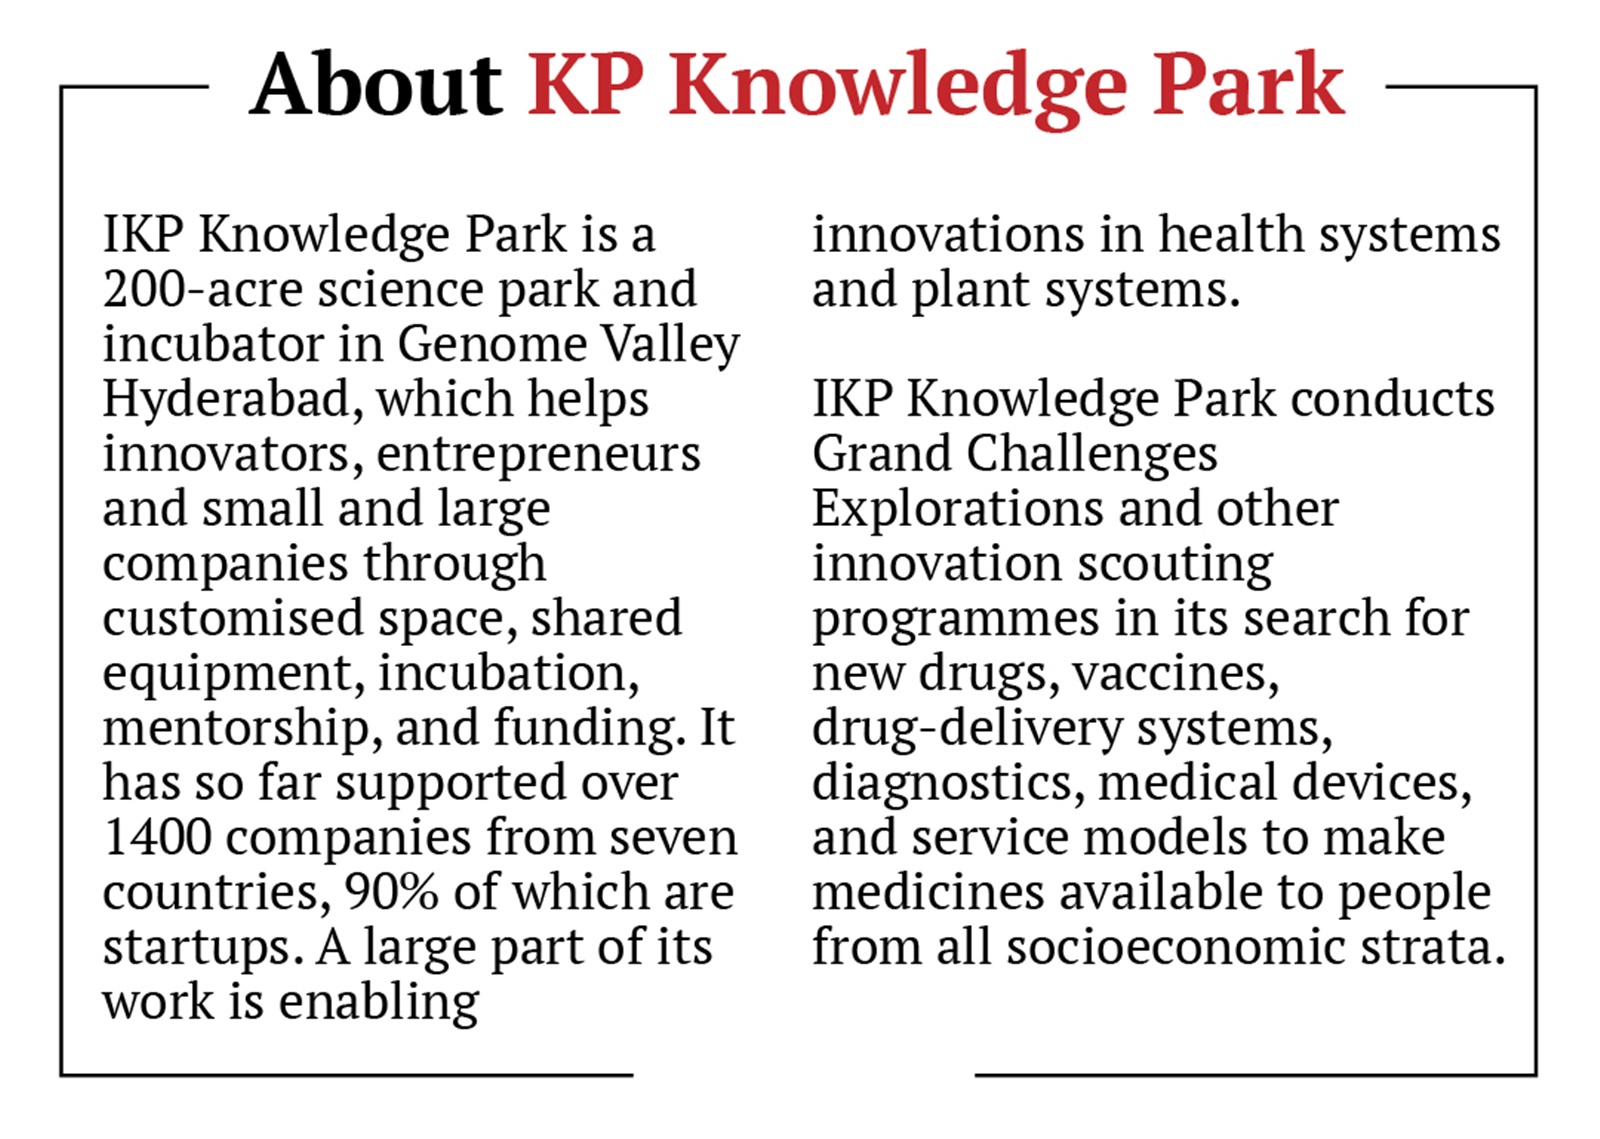 CEO van Hyderabad IKP Knowledge Park